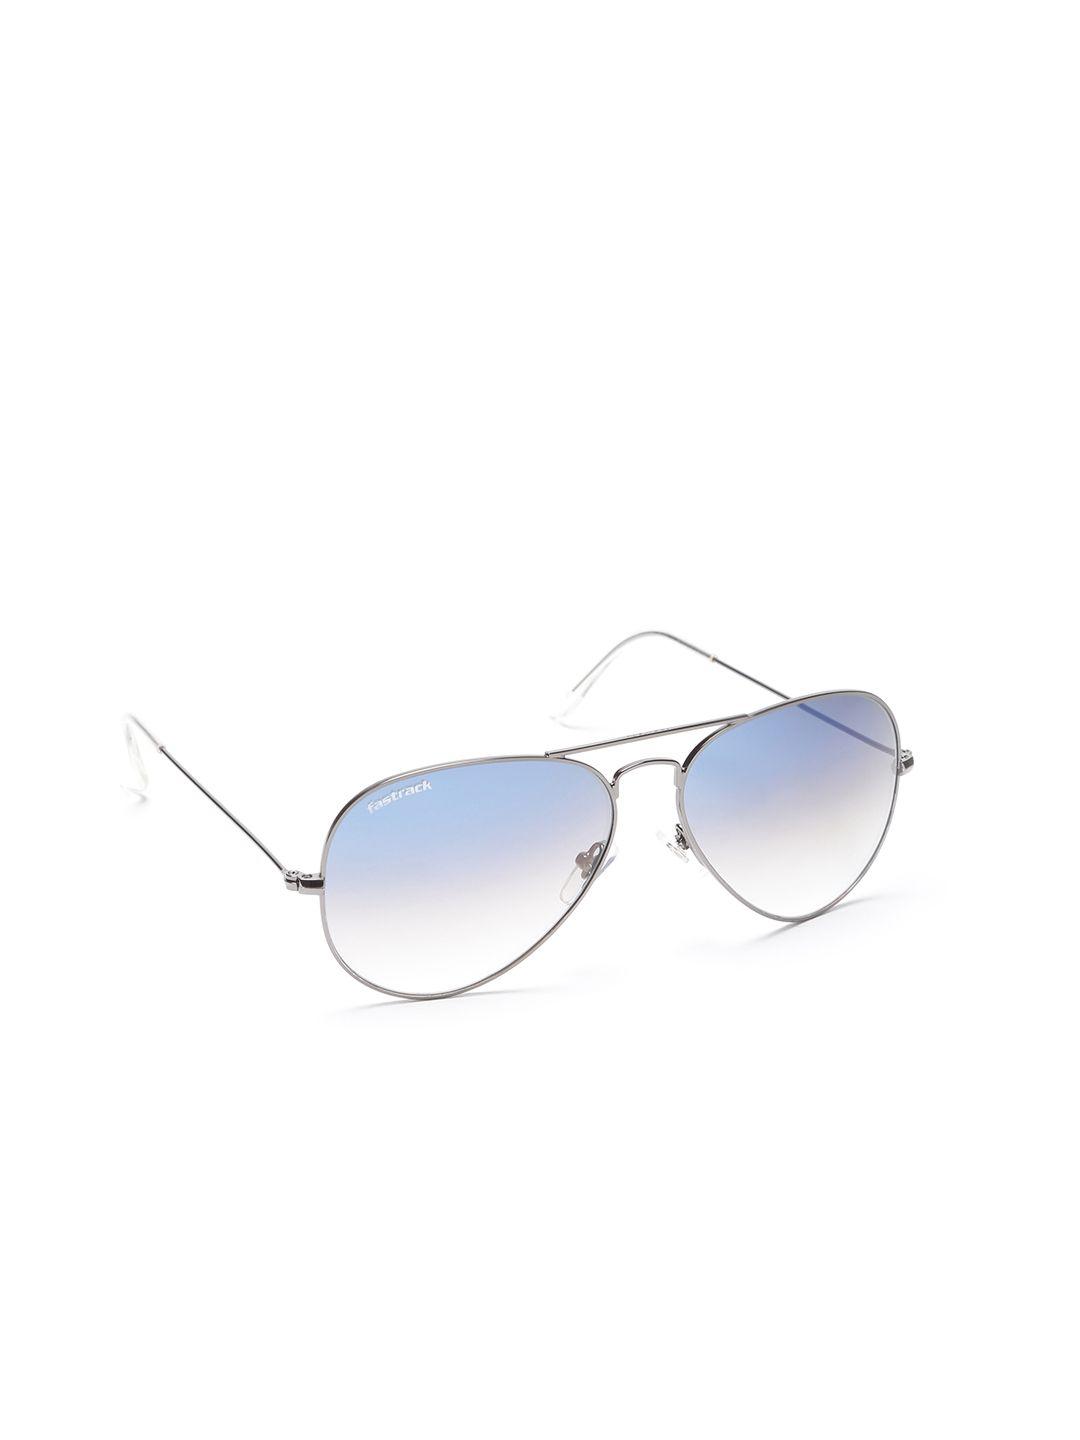 fastrack men aviator sunglasses m165gy19g